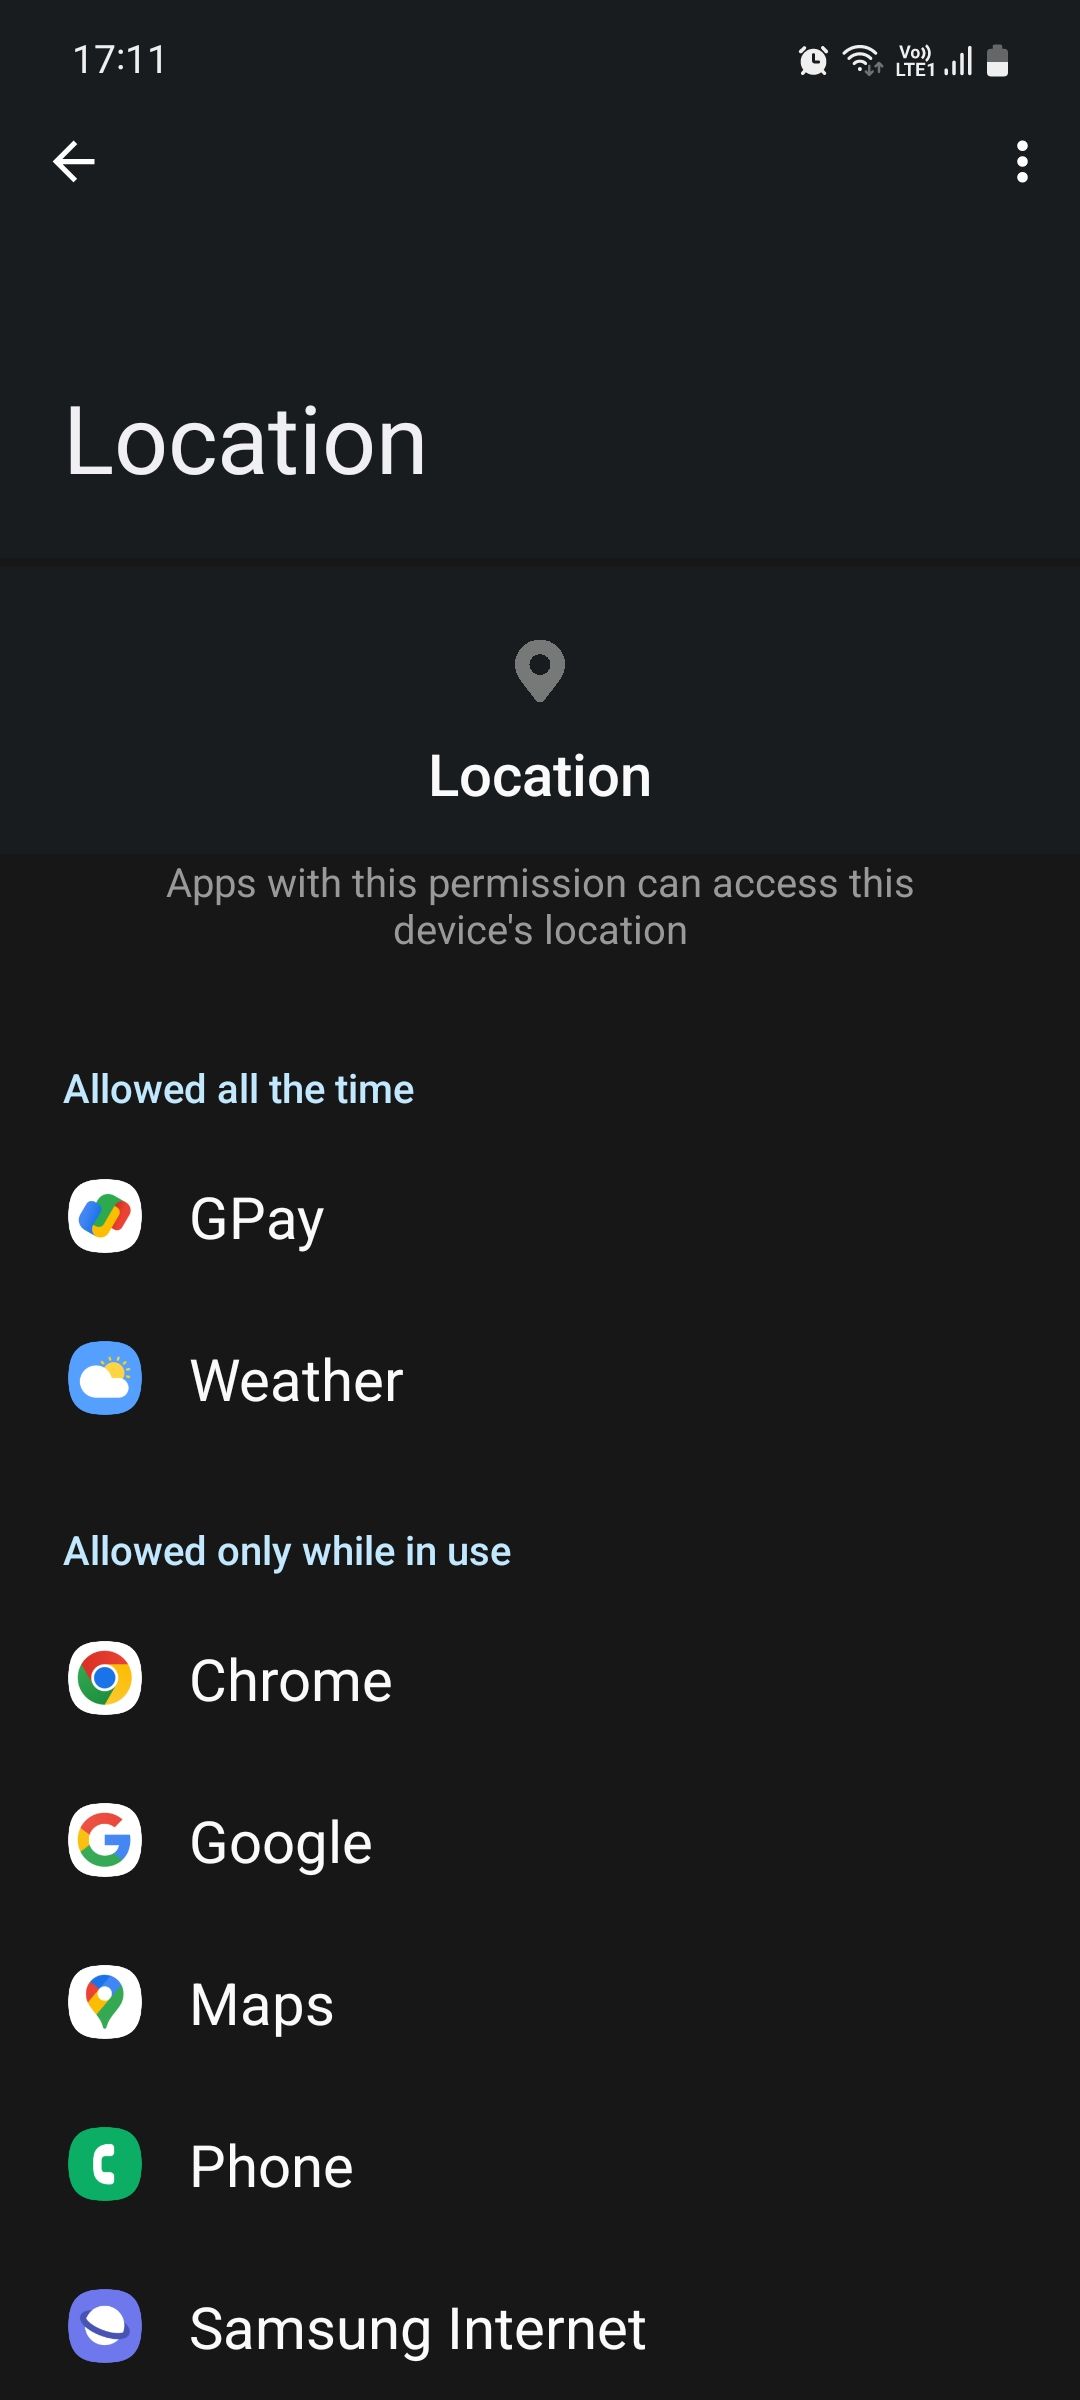 Samsung Location apps